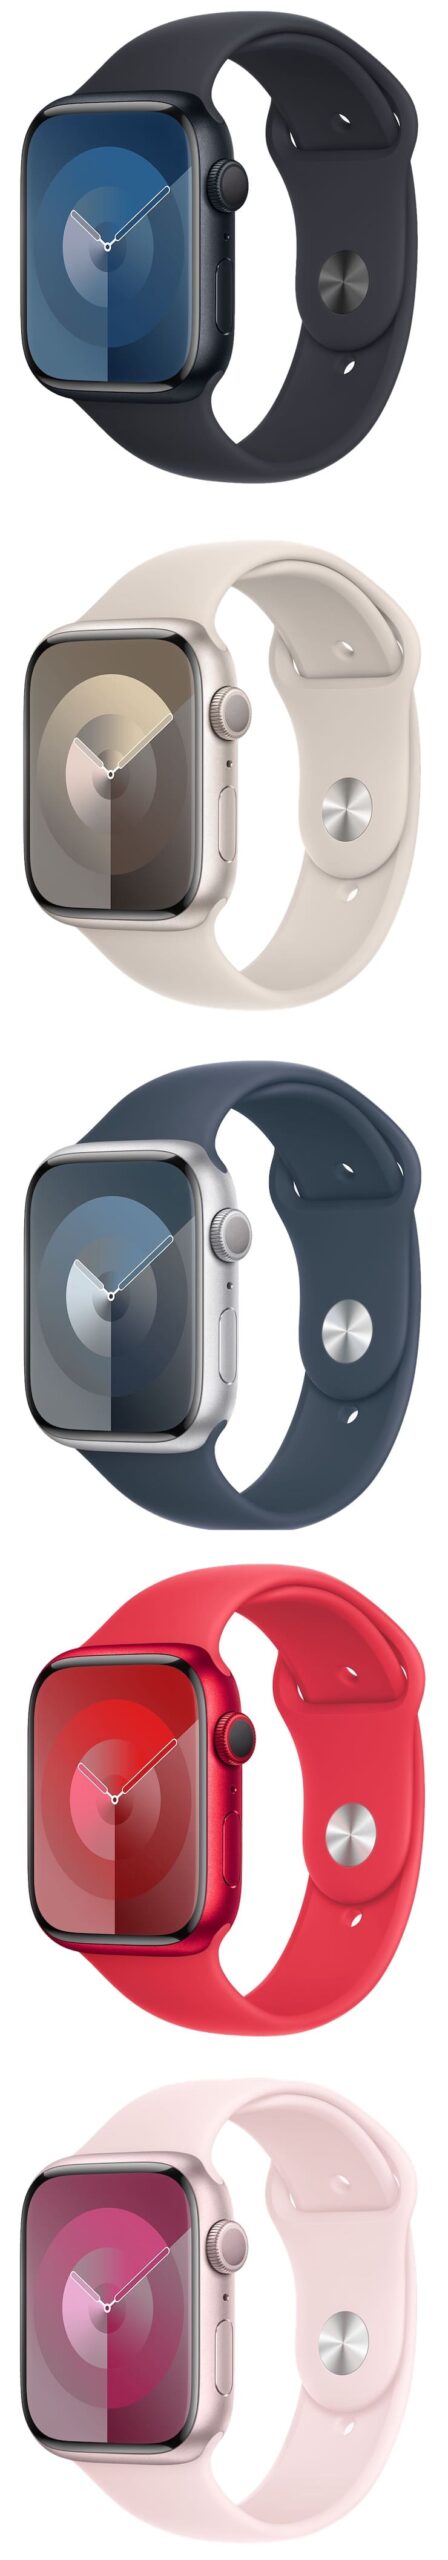 Apple Watch Series 9 colors in aluminum case